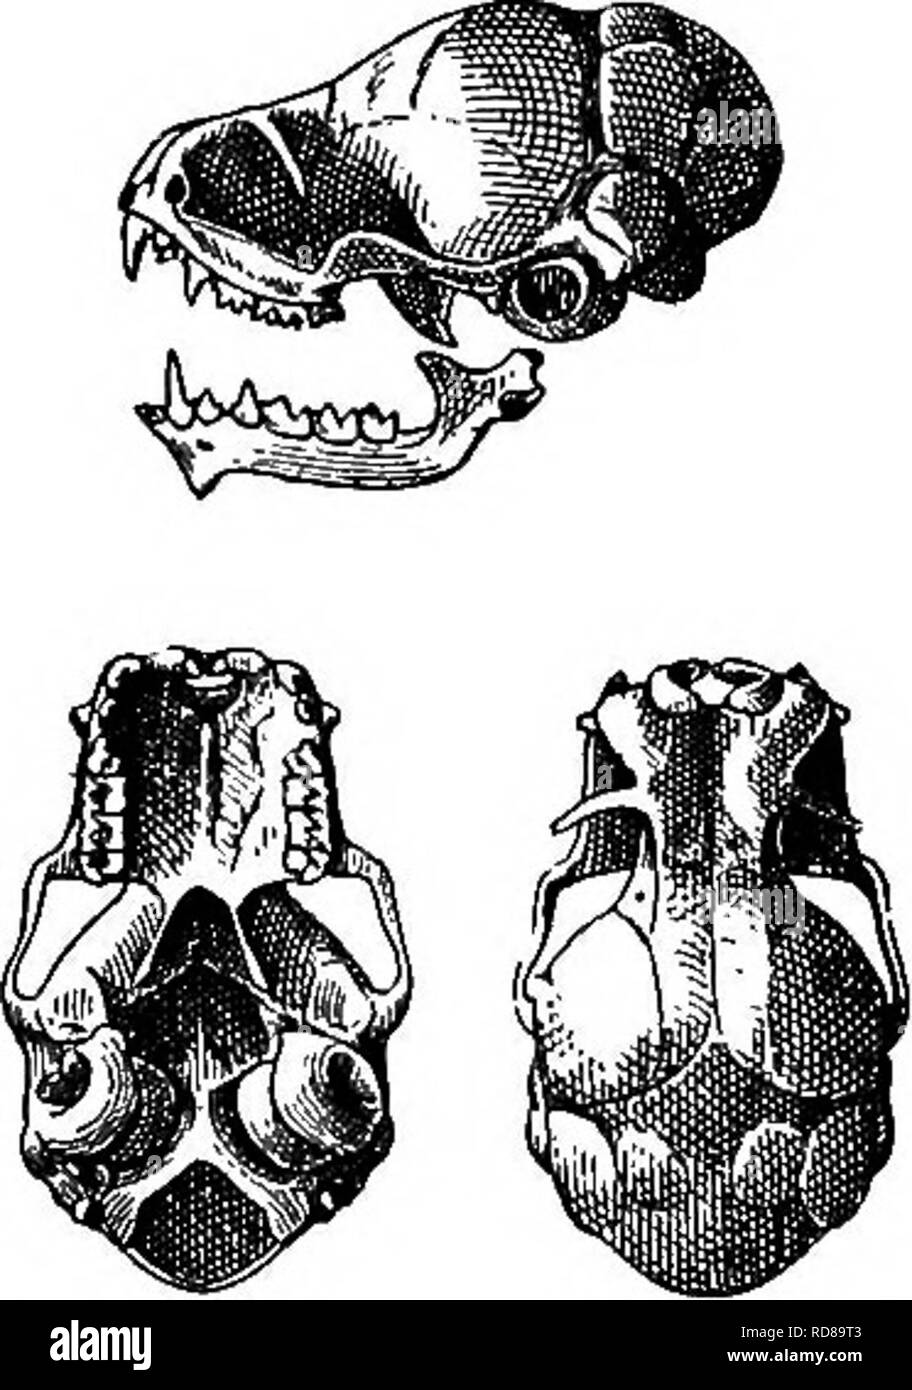 . The families and genera of bats . Bats; Bats. 88 BULLETIN&quot; 57, UNITED STATES NATIONAL MUSEUM. Genus RHYNCHISCUS Miller. 1823. Probosoidea Spix, Simiarum et Vespertilionum Brasil. Spec. Nov., p. 61. (Not ProTioscidca J. 6. Brugiere, 1791.) 1867. RUynchonyctcris Peters, Monatsber. k.' preuss. Akad. Wissensch., Berlin, p. 477. (Not Rhinchonycteris Tschudi, 1844-46.) 1878. Rliynchonycteru Dobson, Catal. Cliiropt. Brit, Mus., p. 366. 1904. ProDoscidea Allen, Bull. Amer. Mus. Nat. Hist., XX, p. 343, October 8, 1904. 1907. Rhyncliiscus Miller, Proc. Biol. Soc, Washington, XX, p. &lt;Ki. June 1 Stock Photo